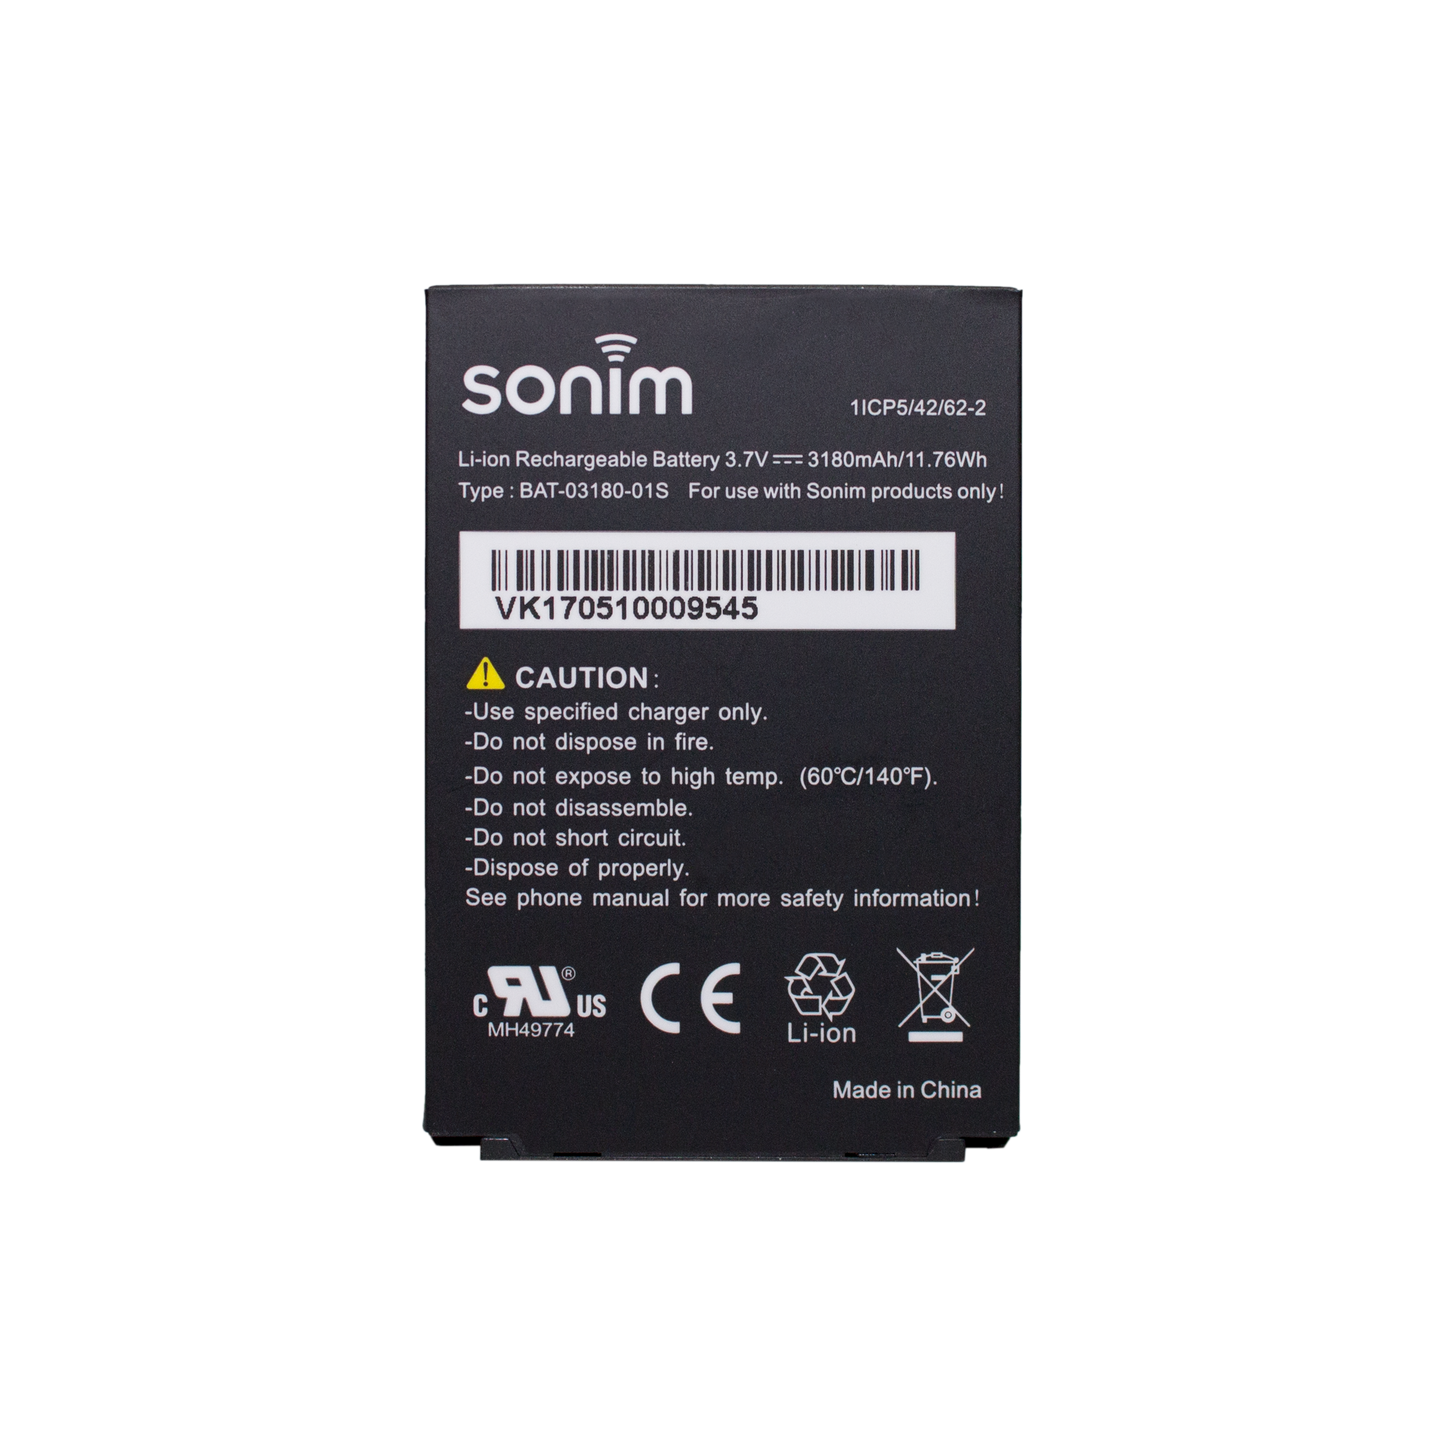 Sonim 3180mAh Li-ion Battery for XP5s